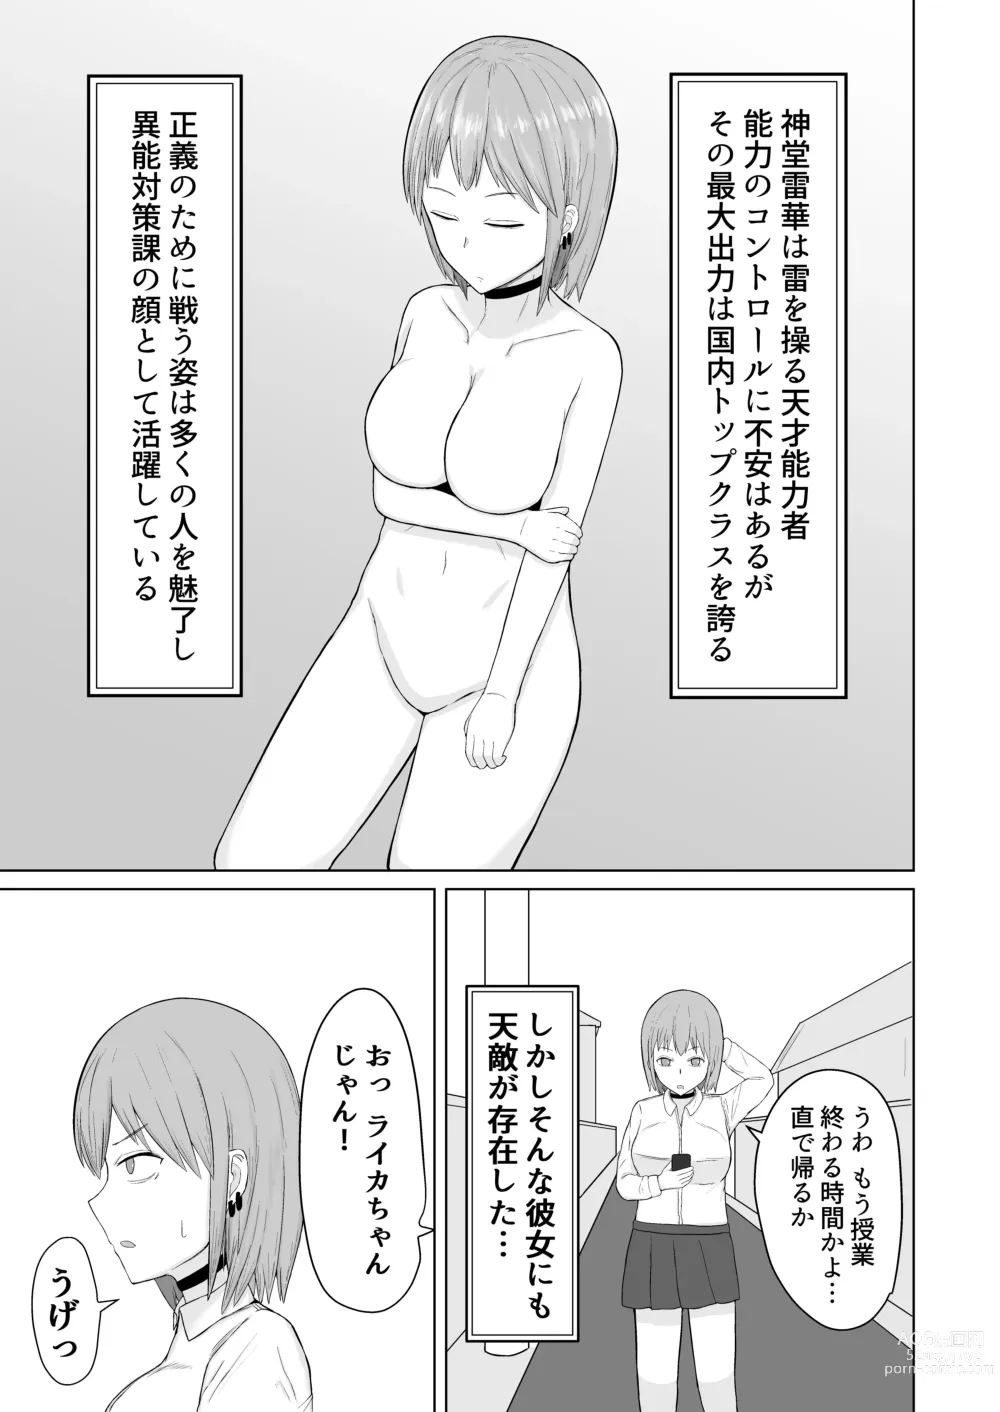 Page 7 of doujinshi Chounouryoku Shoujo  Laika-chan VS Yarichin  Kusoyaro